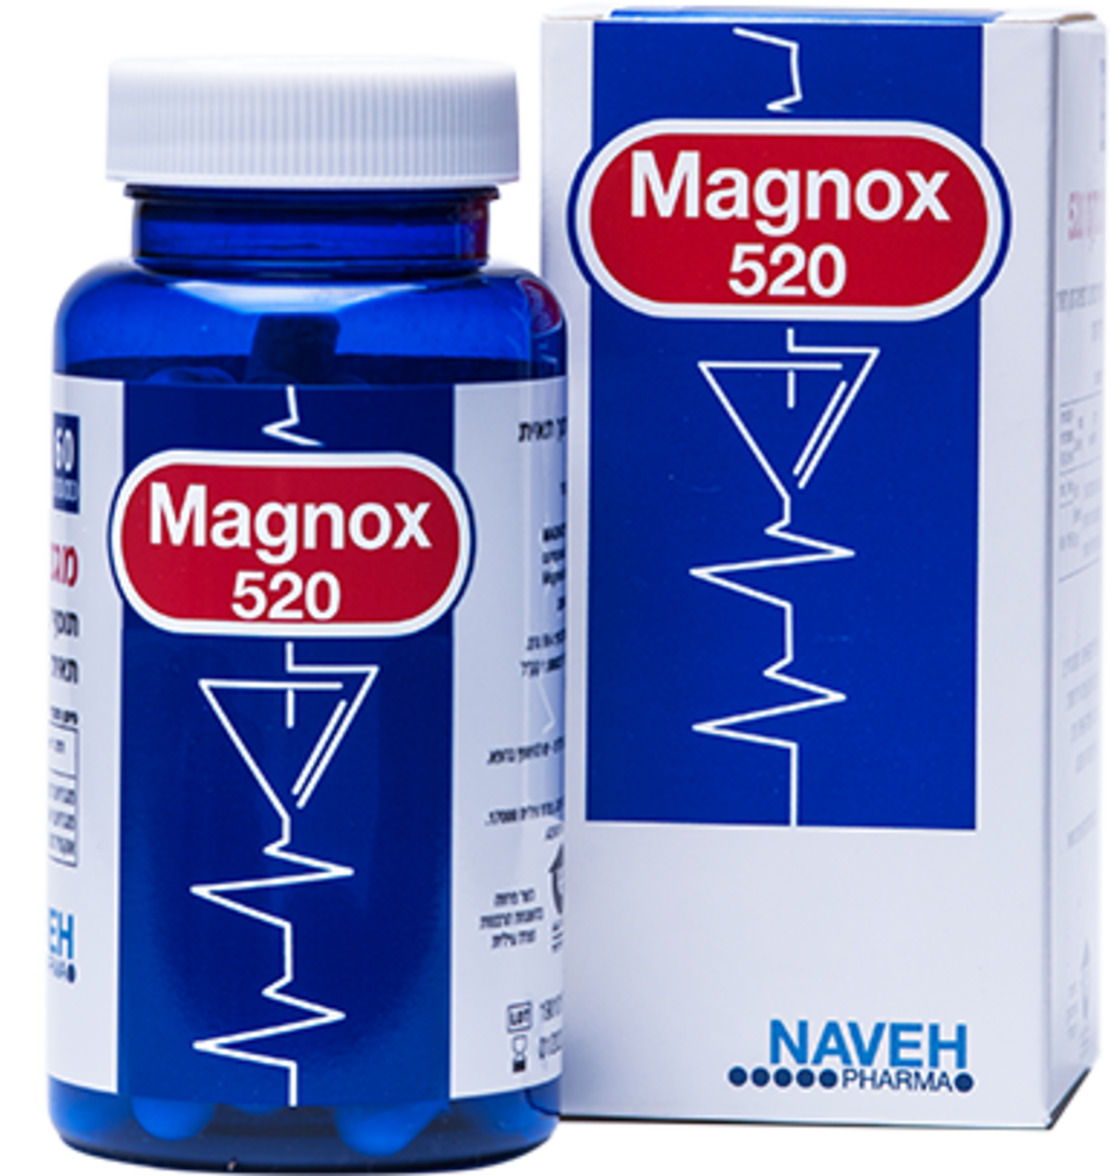 Magnox 520 נווה מגנוקס | Naveh Pharma